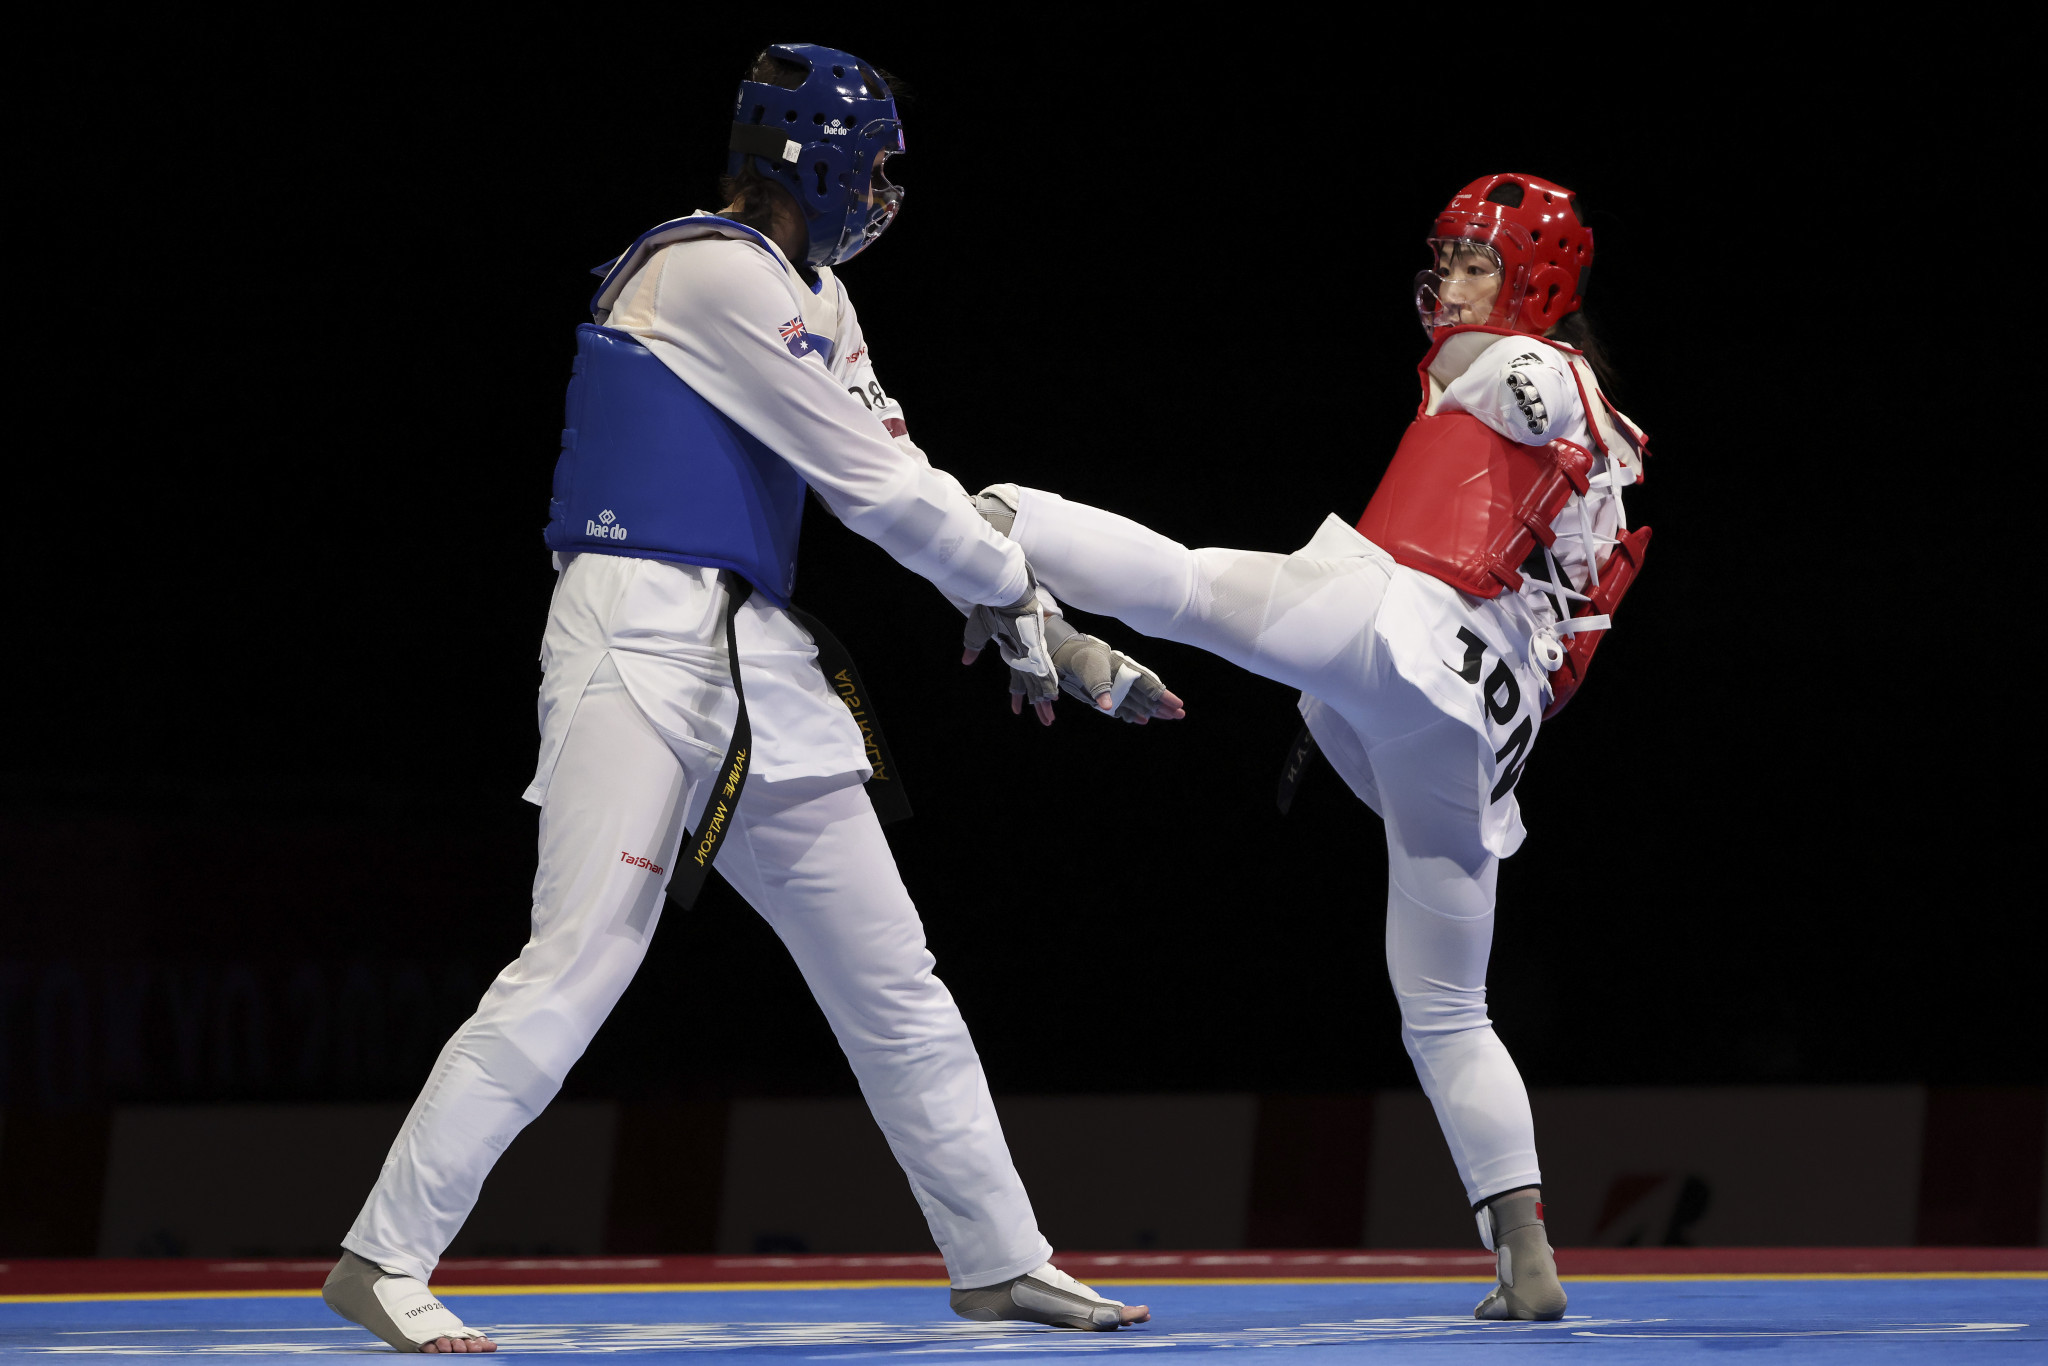 Taekwondo debuted at the Paralympic Games at Tokyo 2020 last year ©Getty Images